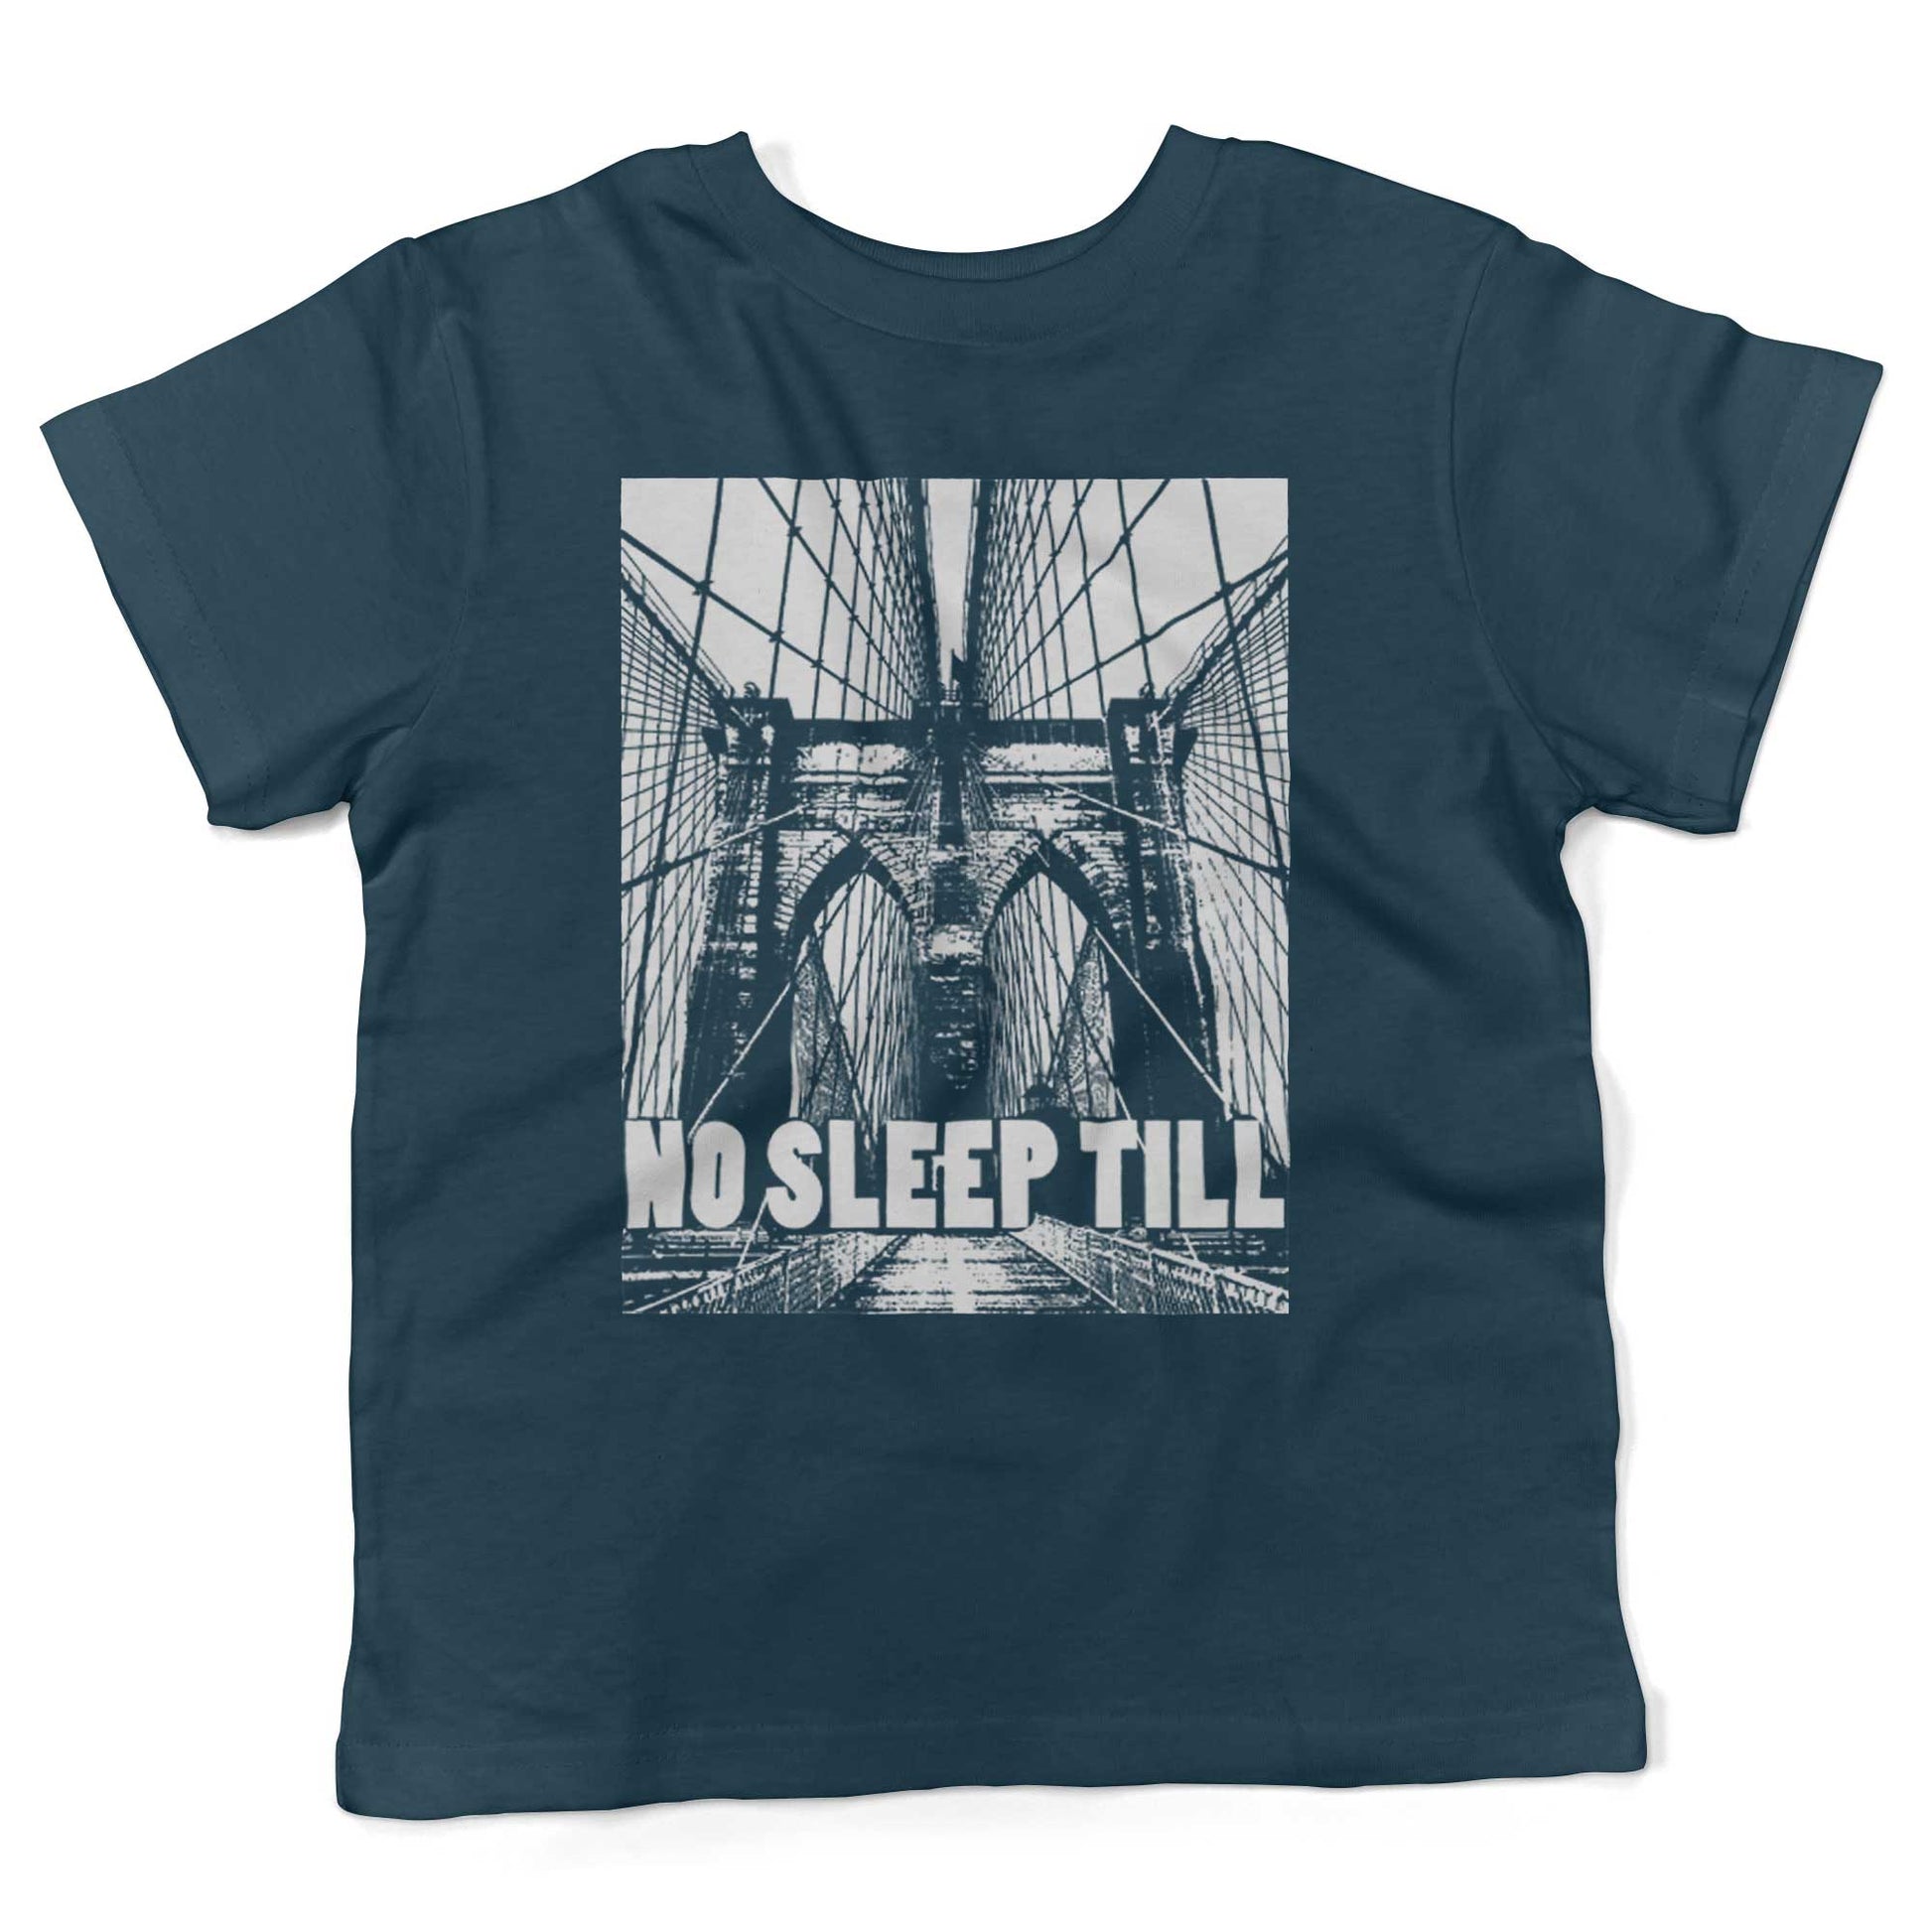 No Sleep Till Brooklyn Toddler Shirt-Organic Pacific Blue-2T